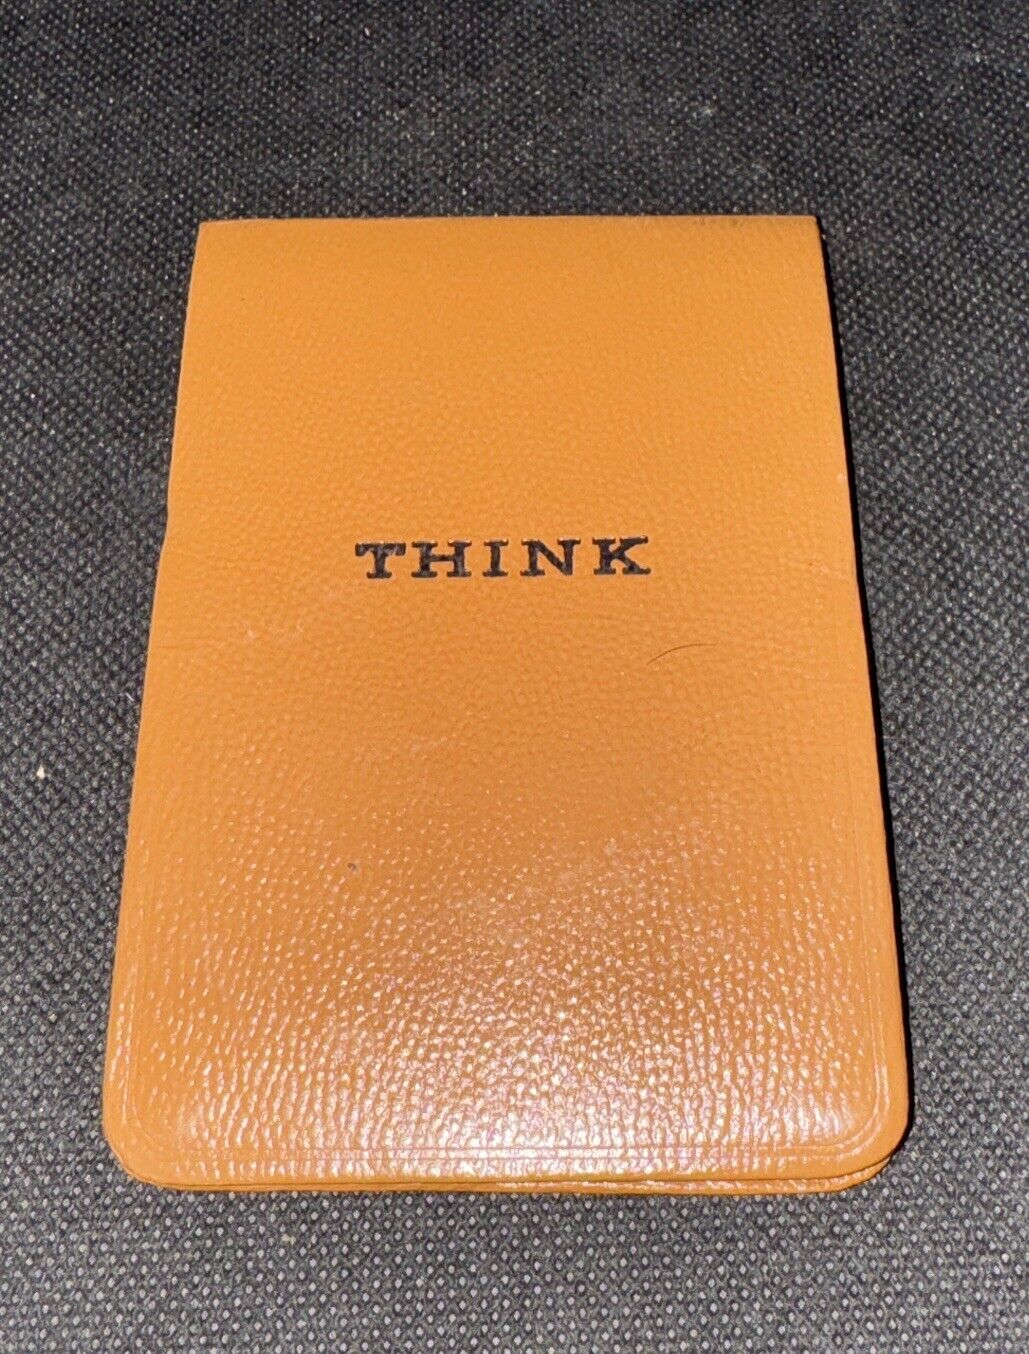 Vtg IBM Think Notepad Thinkpad Pocket Paper Pad Notebook w Paper 1960s